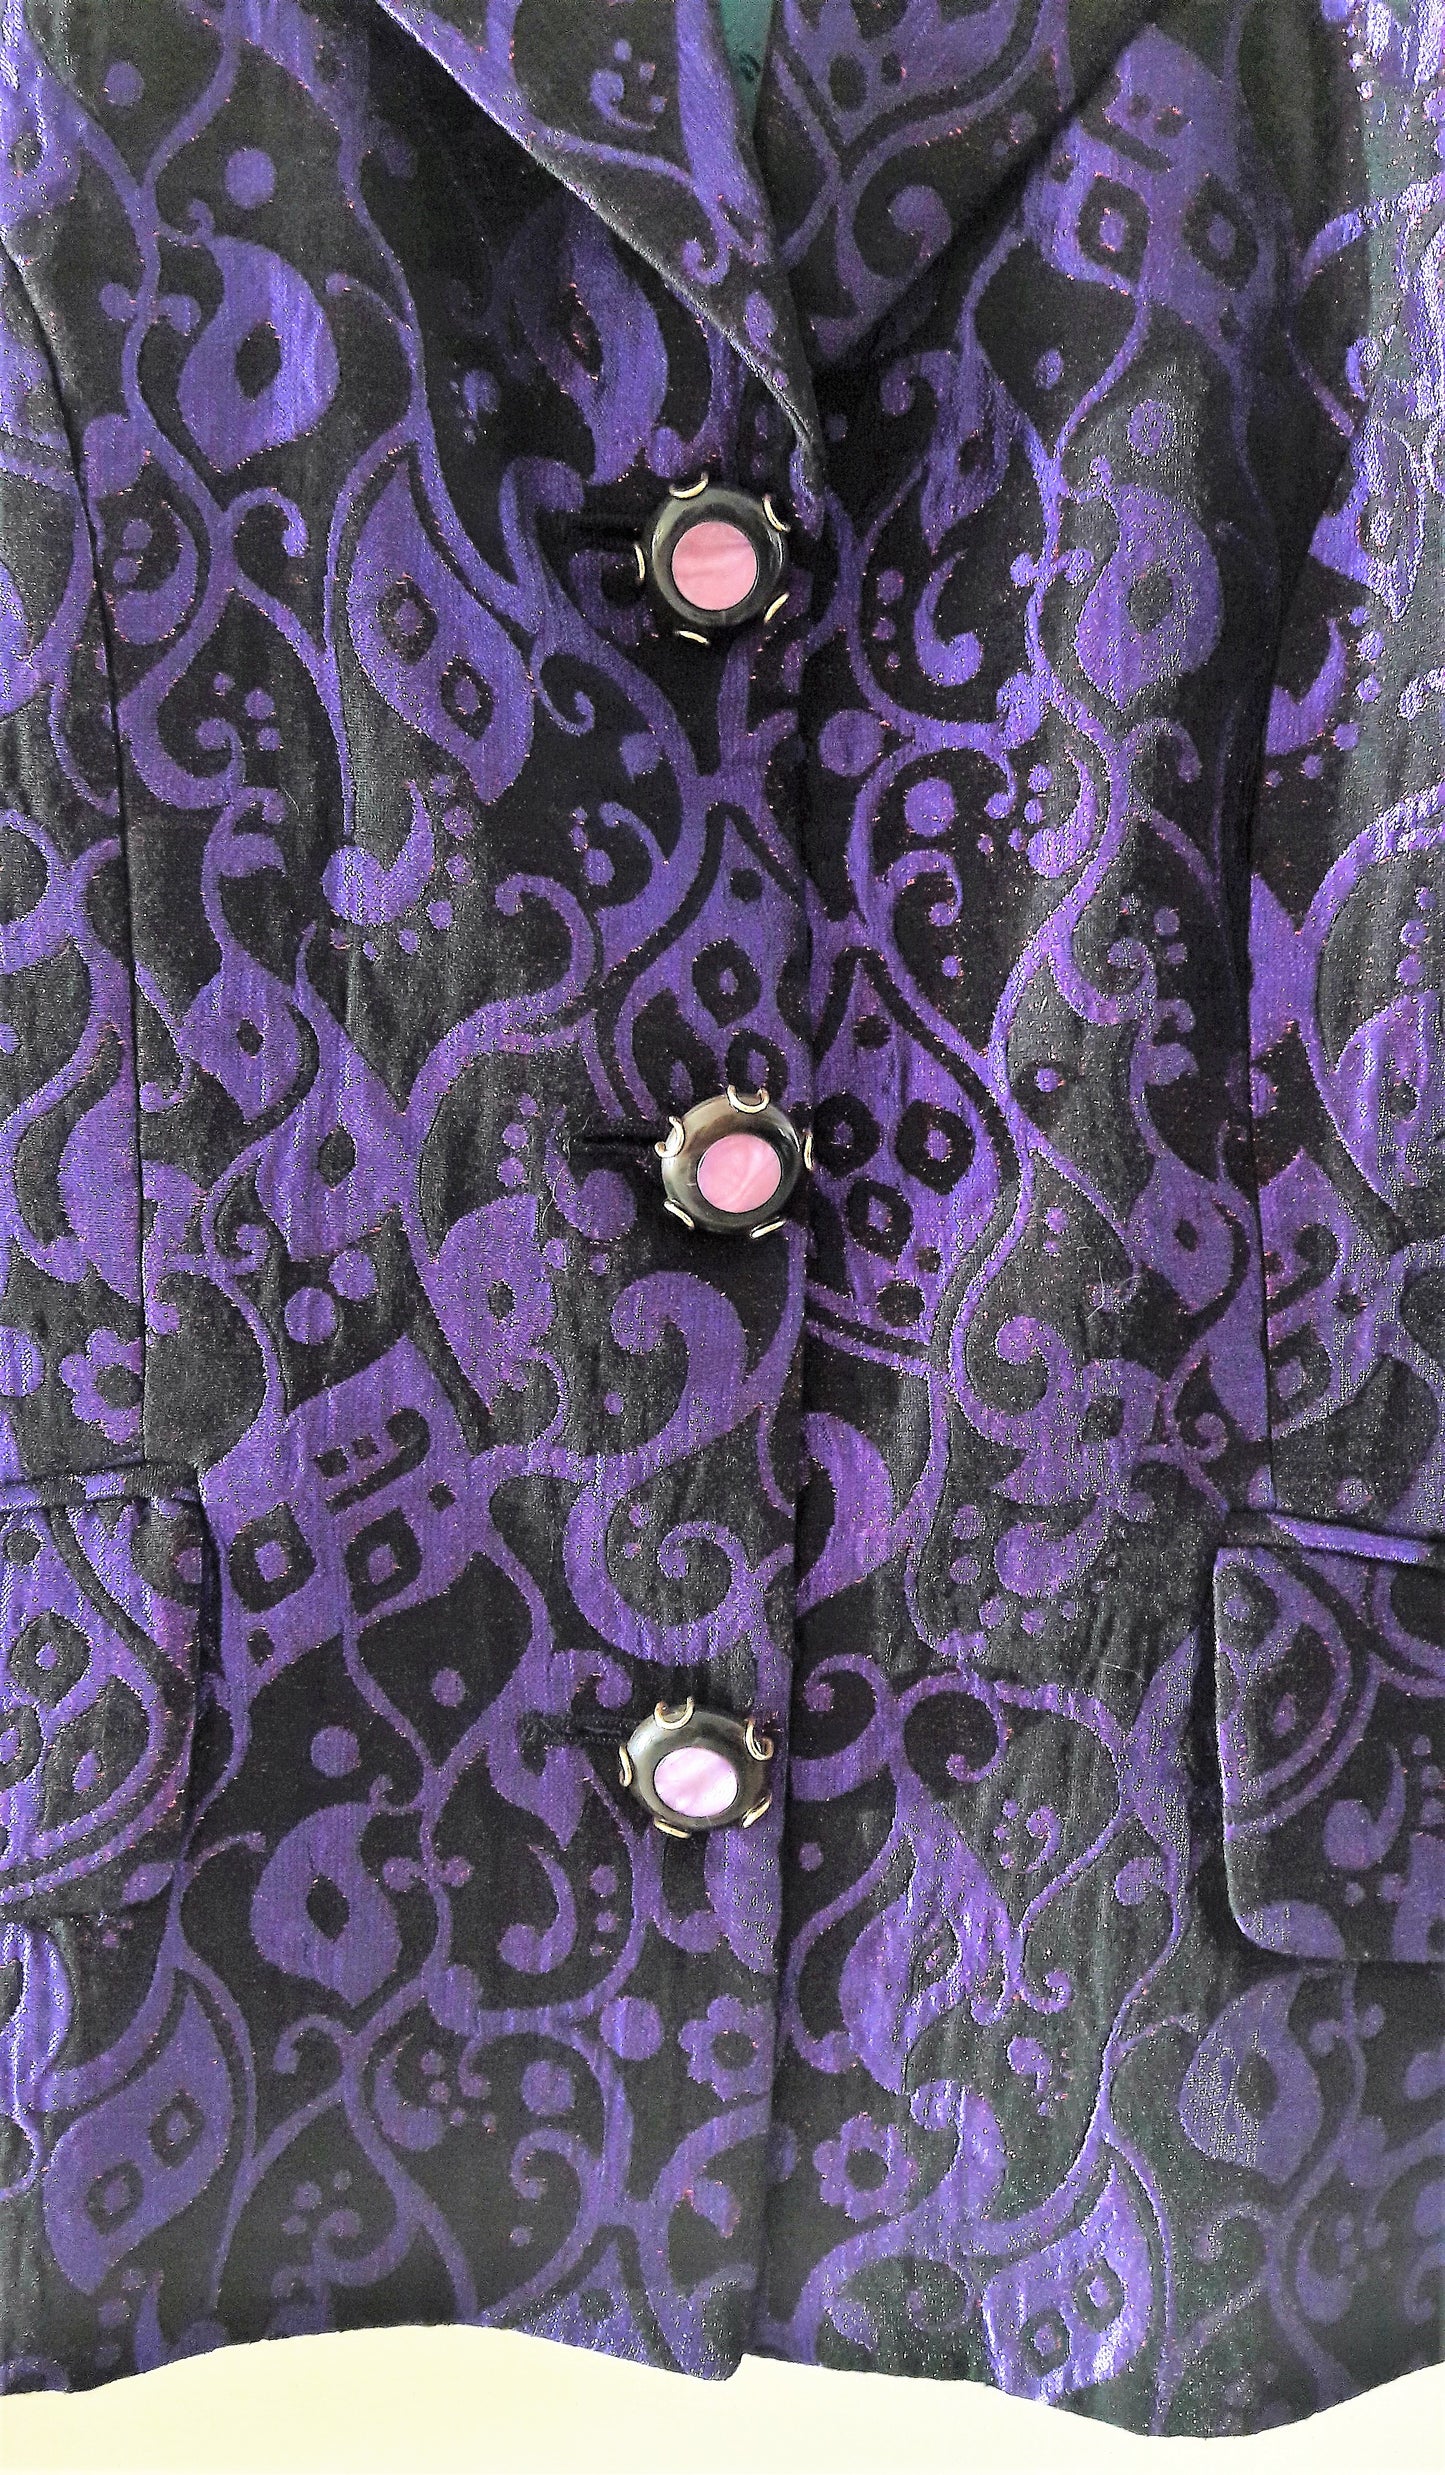 Purple D&G Metallic Paisley Print Blazer